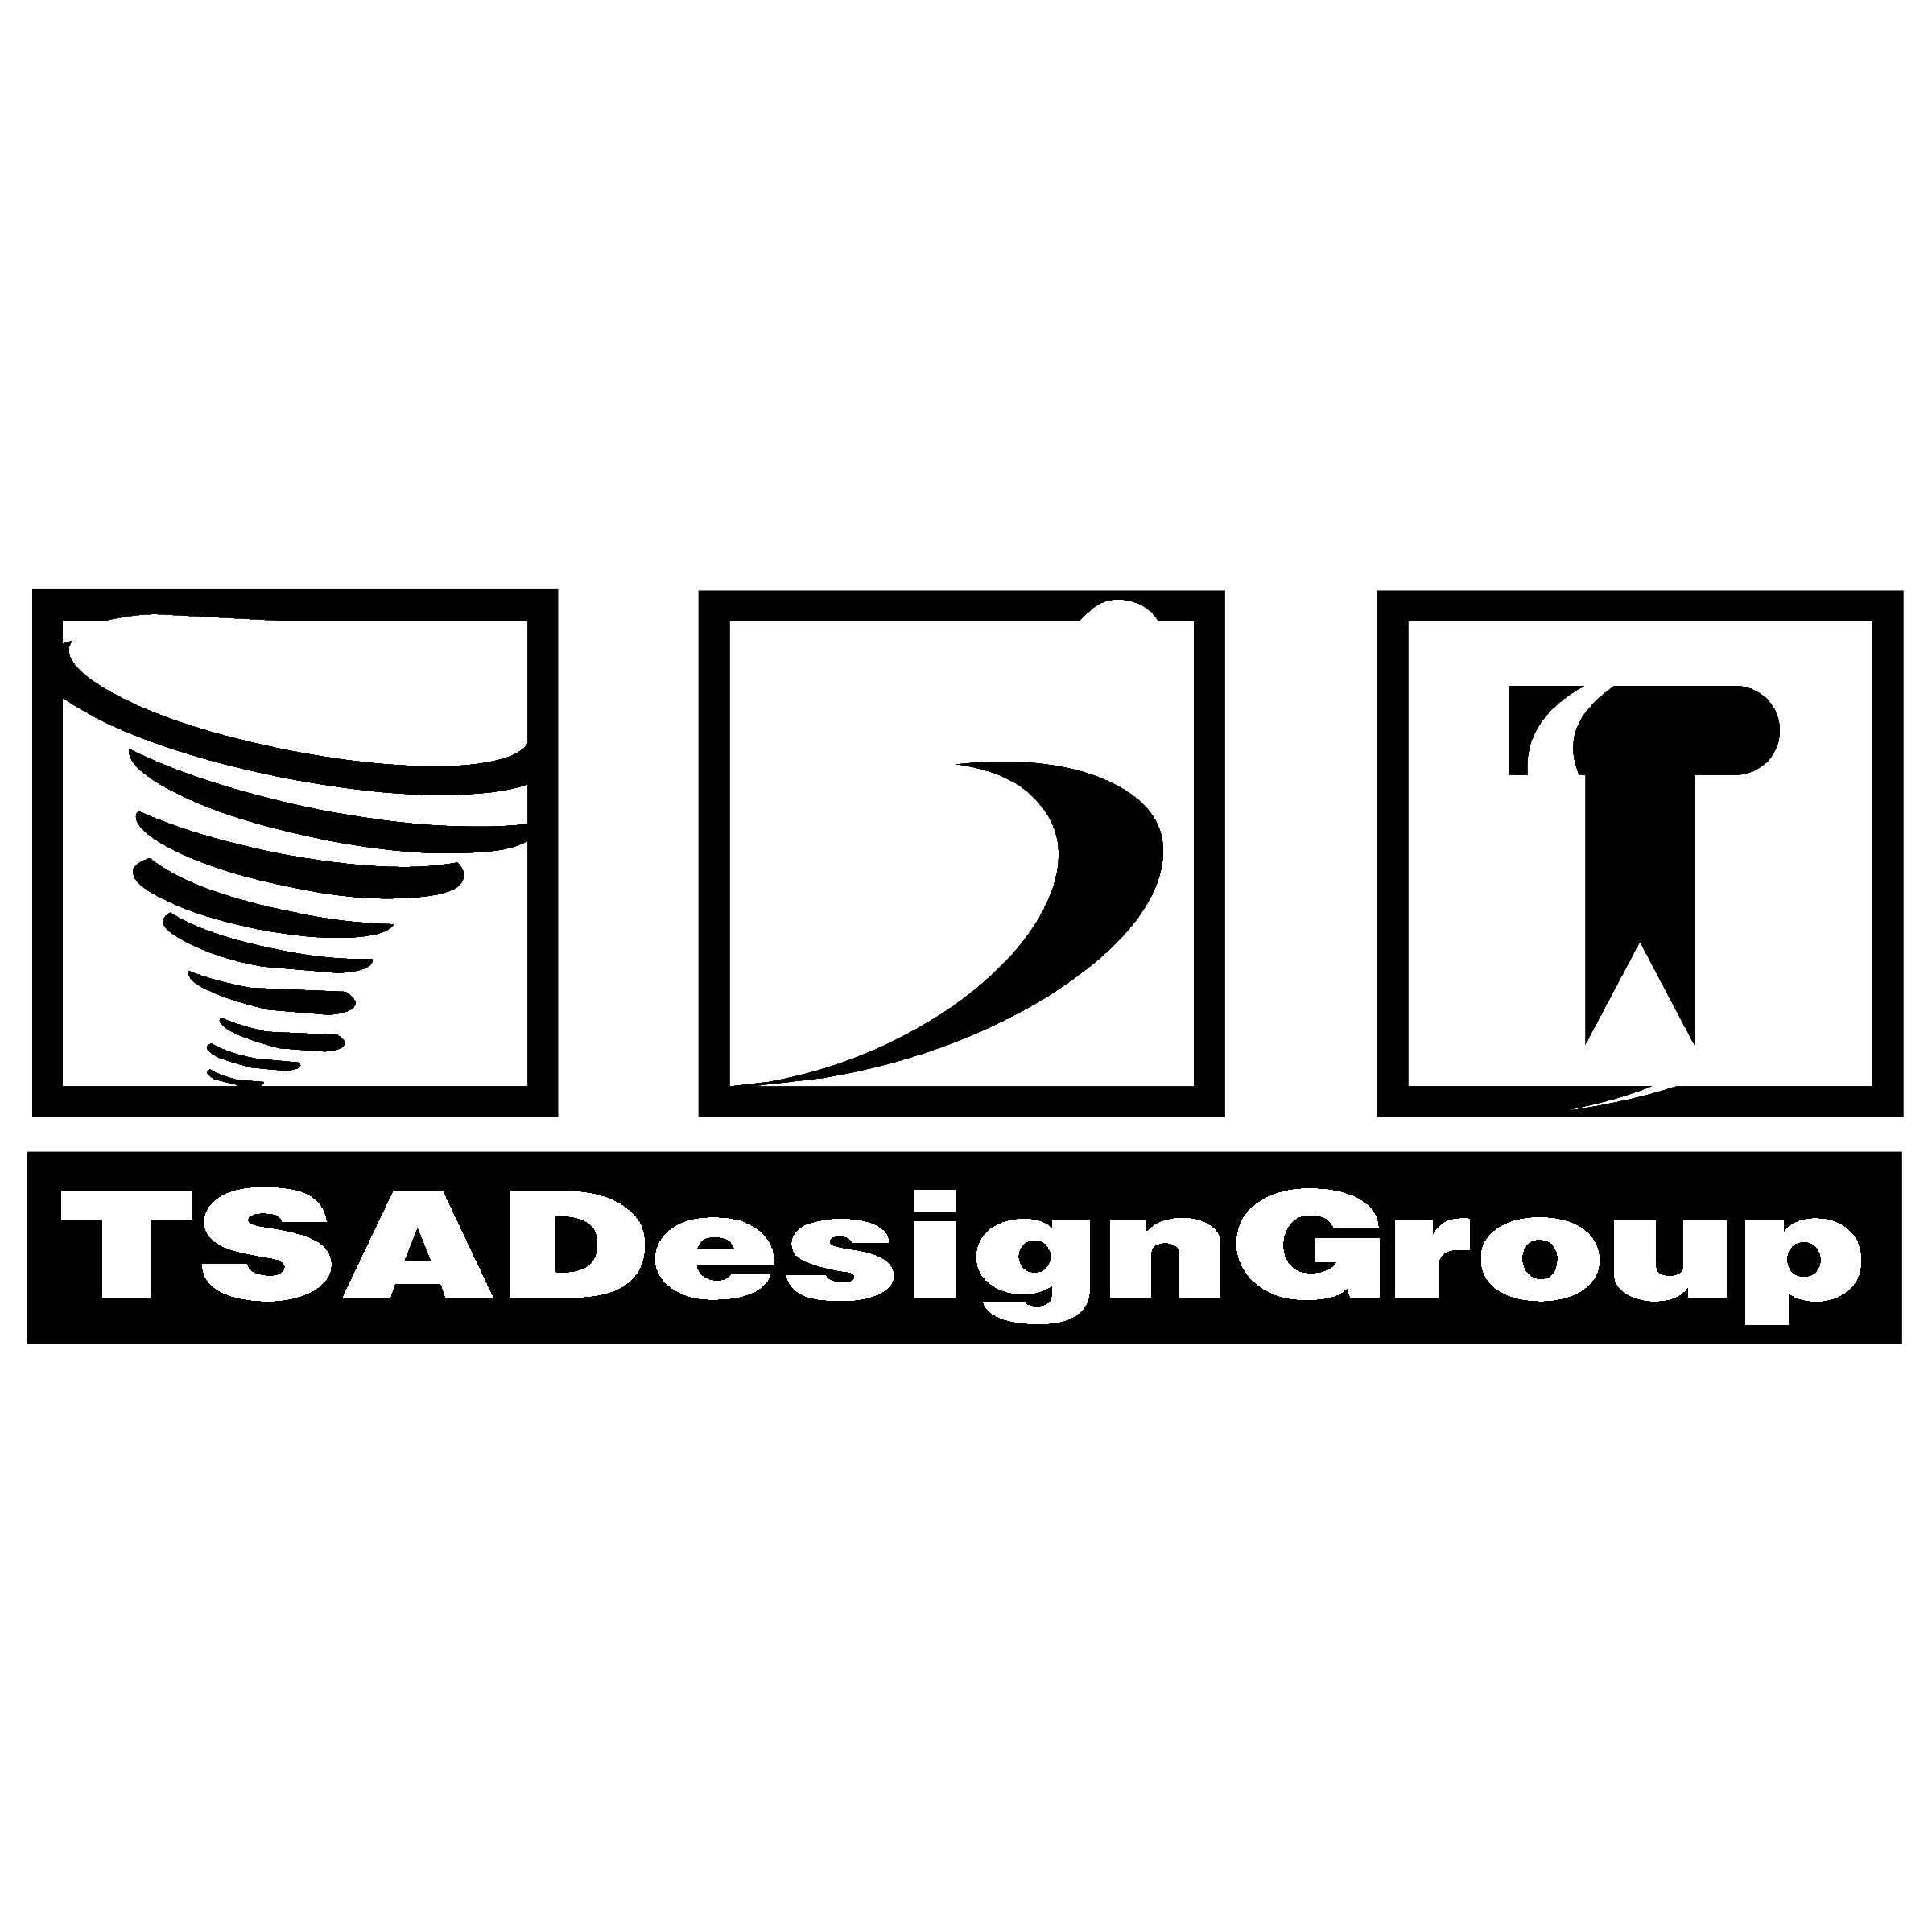 Black and White TSA Logo - TSA Design Group Logo PNG Transparent & SVG Vector - Freebie Supply